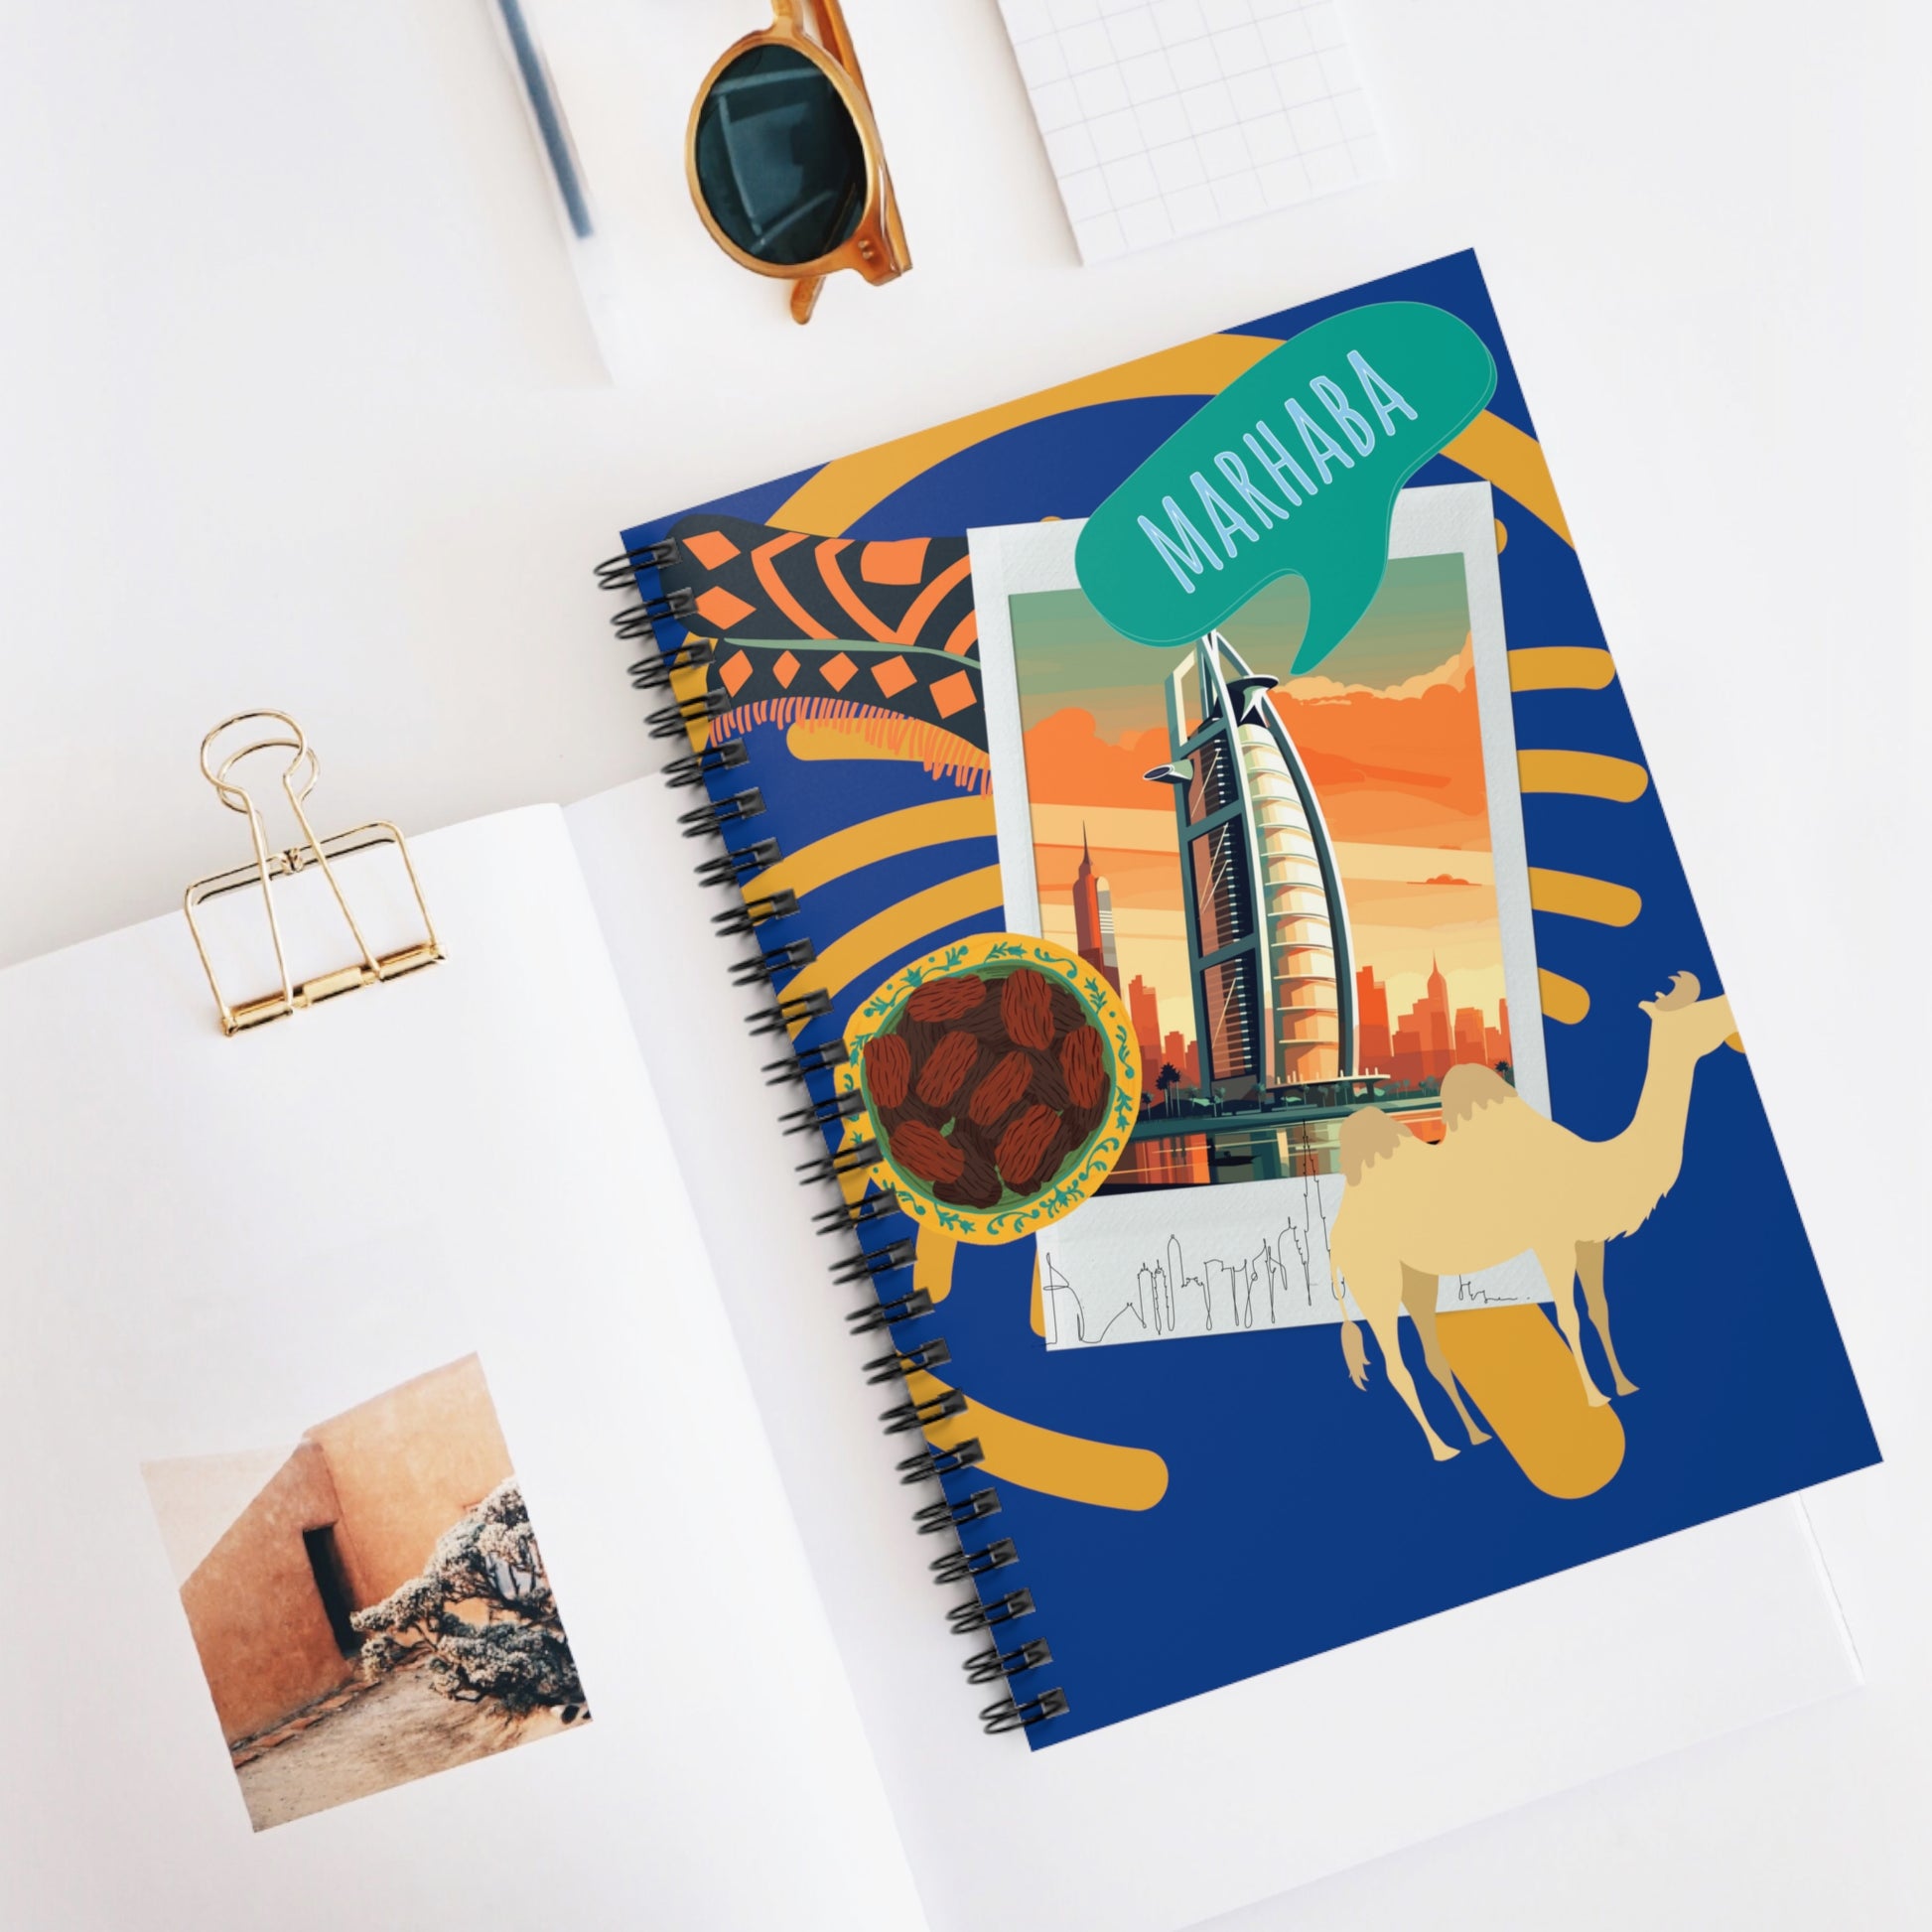 Marhaba Dubai: Spiral Notebook - Log Books - Journals - Diaries - and More Custom Printed by TheGlassyLass.com